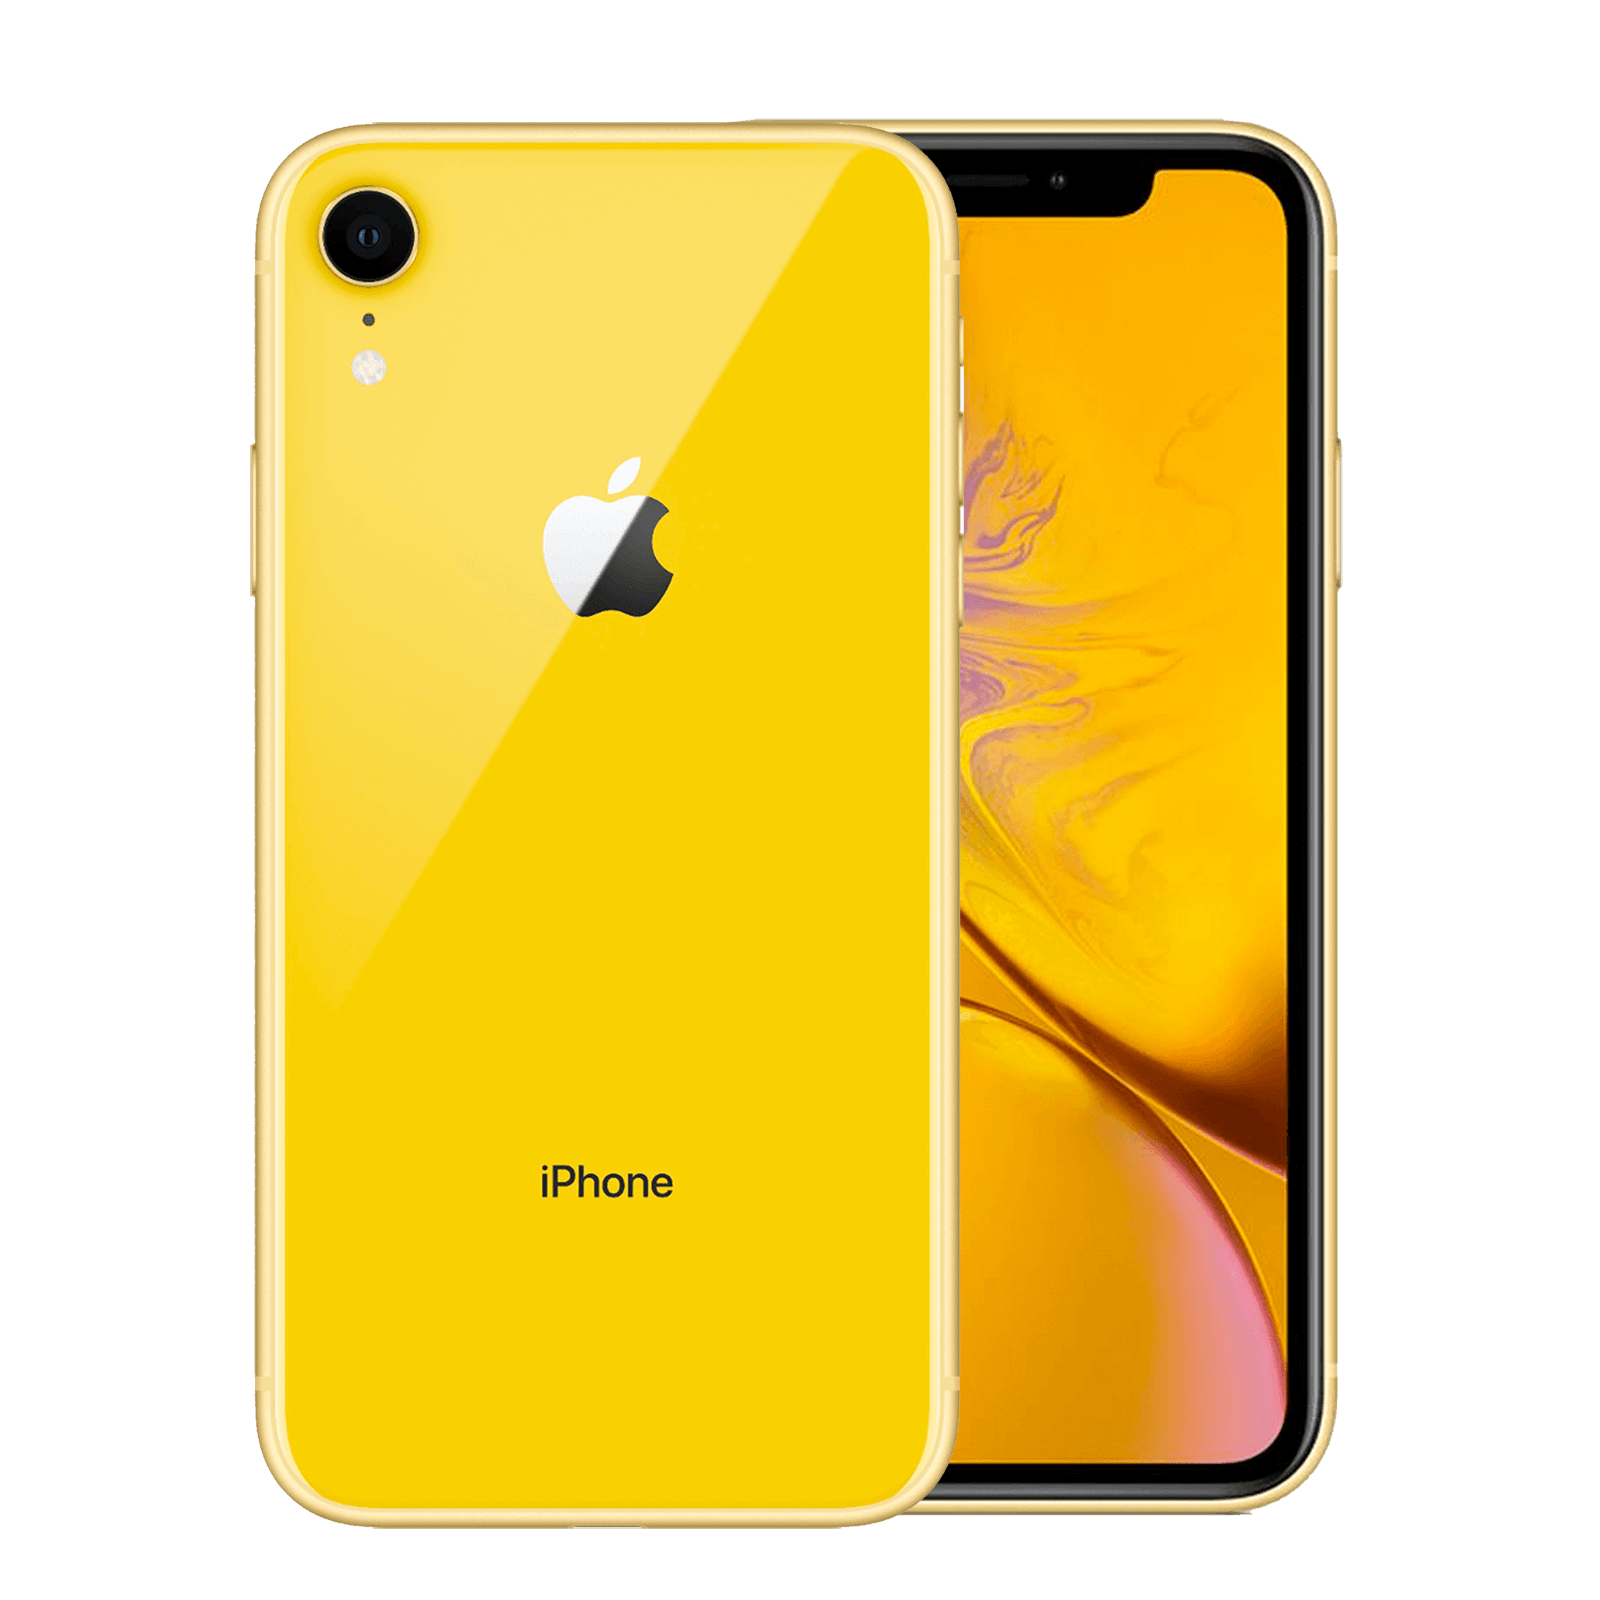 Apple iPhone XR 256GB Yellow Very Good - Unlocked